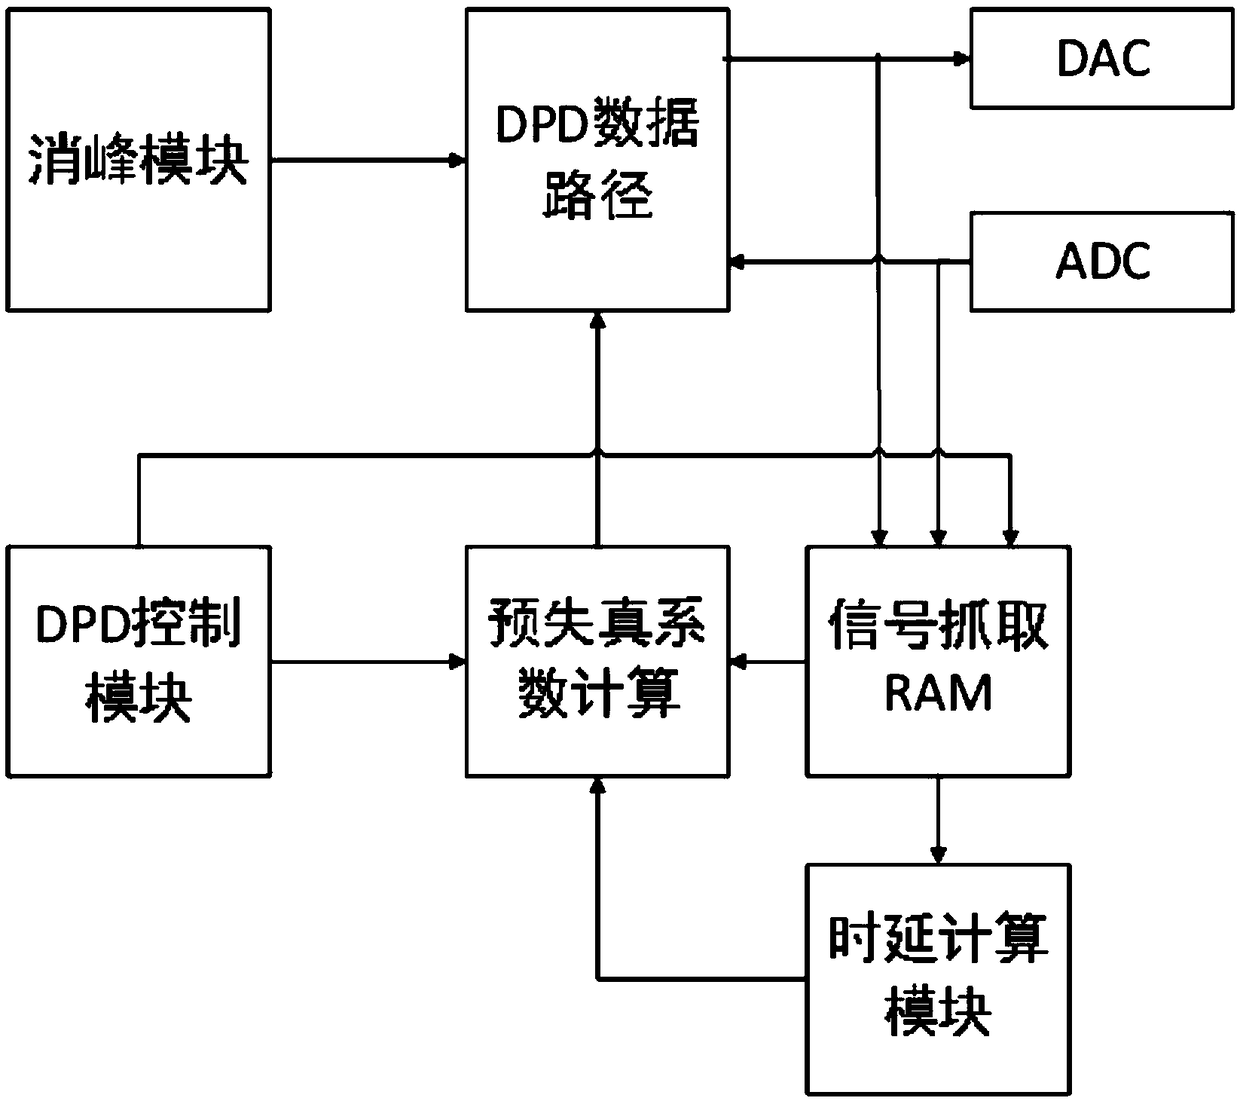 Digital pre-distortion (DPD) processing method for multi-mode RRU